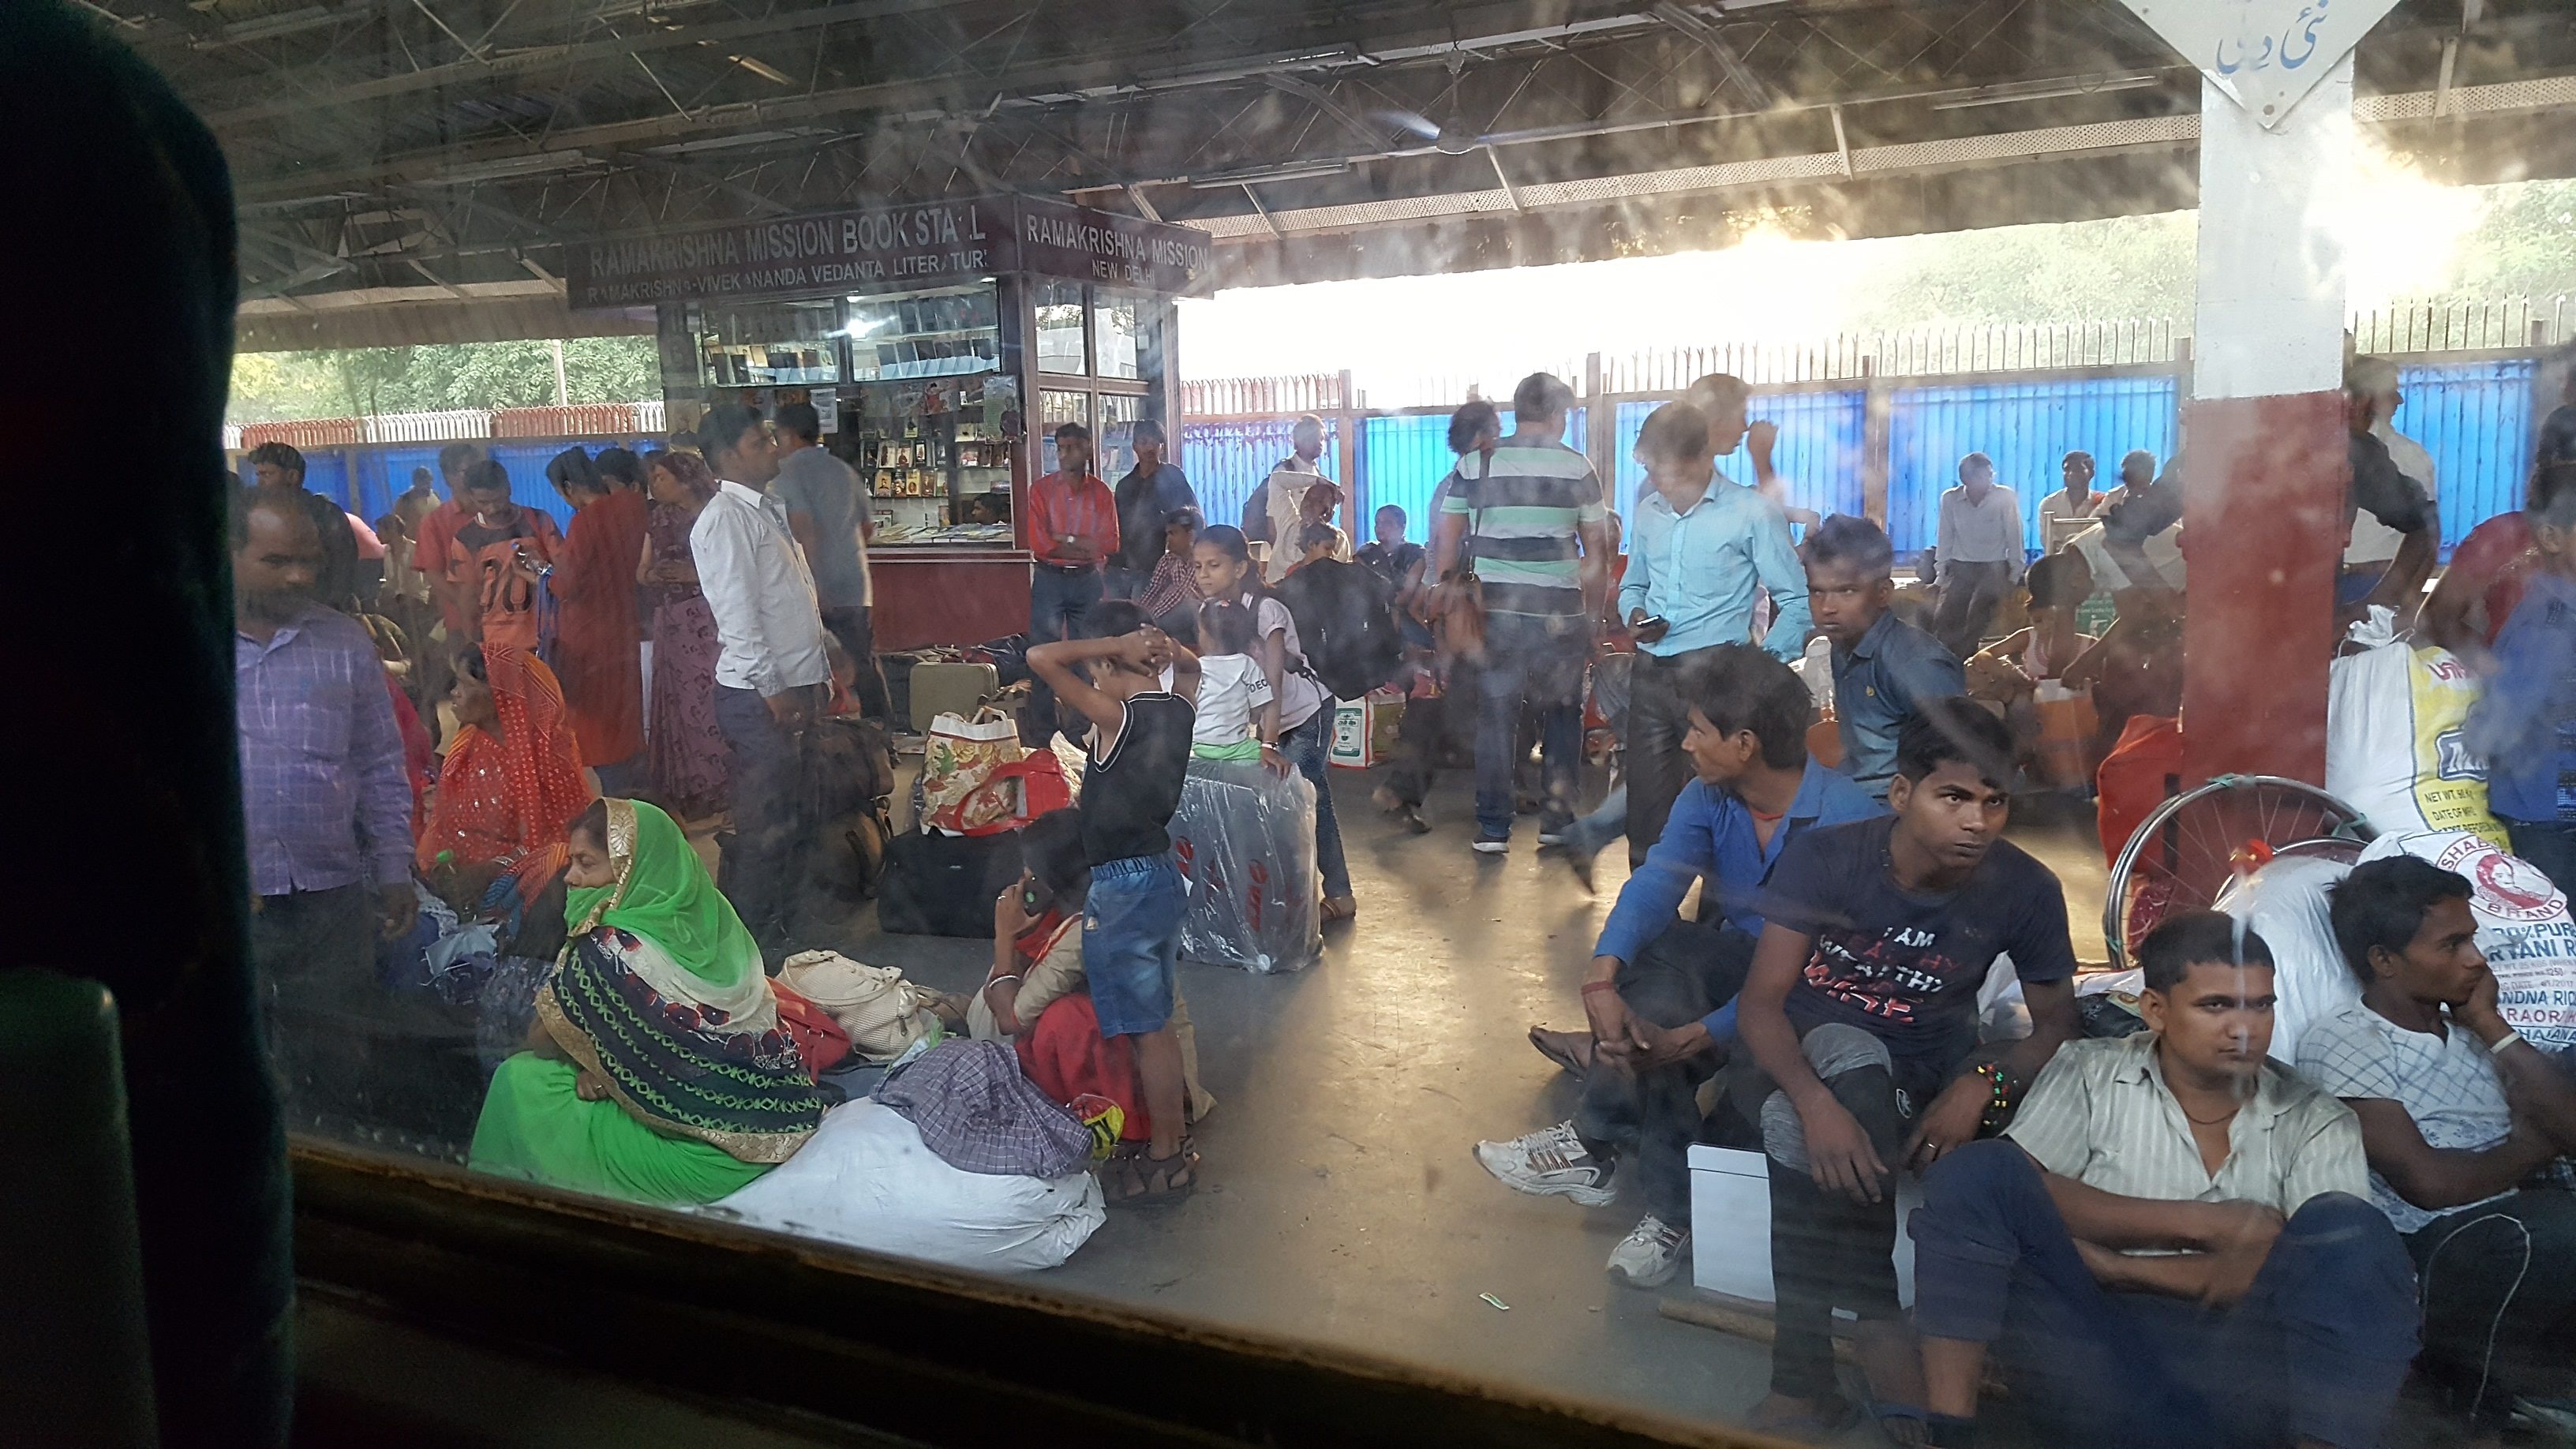  Voyage en Inde du Nord/ aufildeslieux.fr/ La gare de New Delhi©K.Hibbs